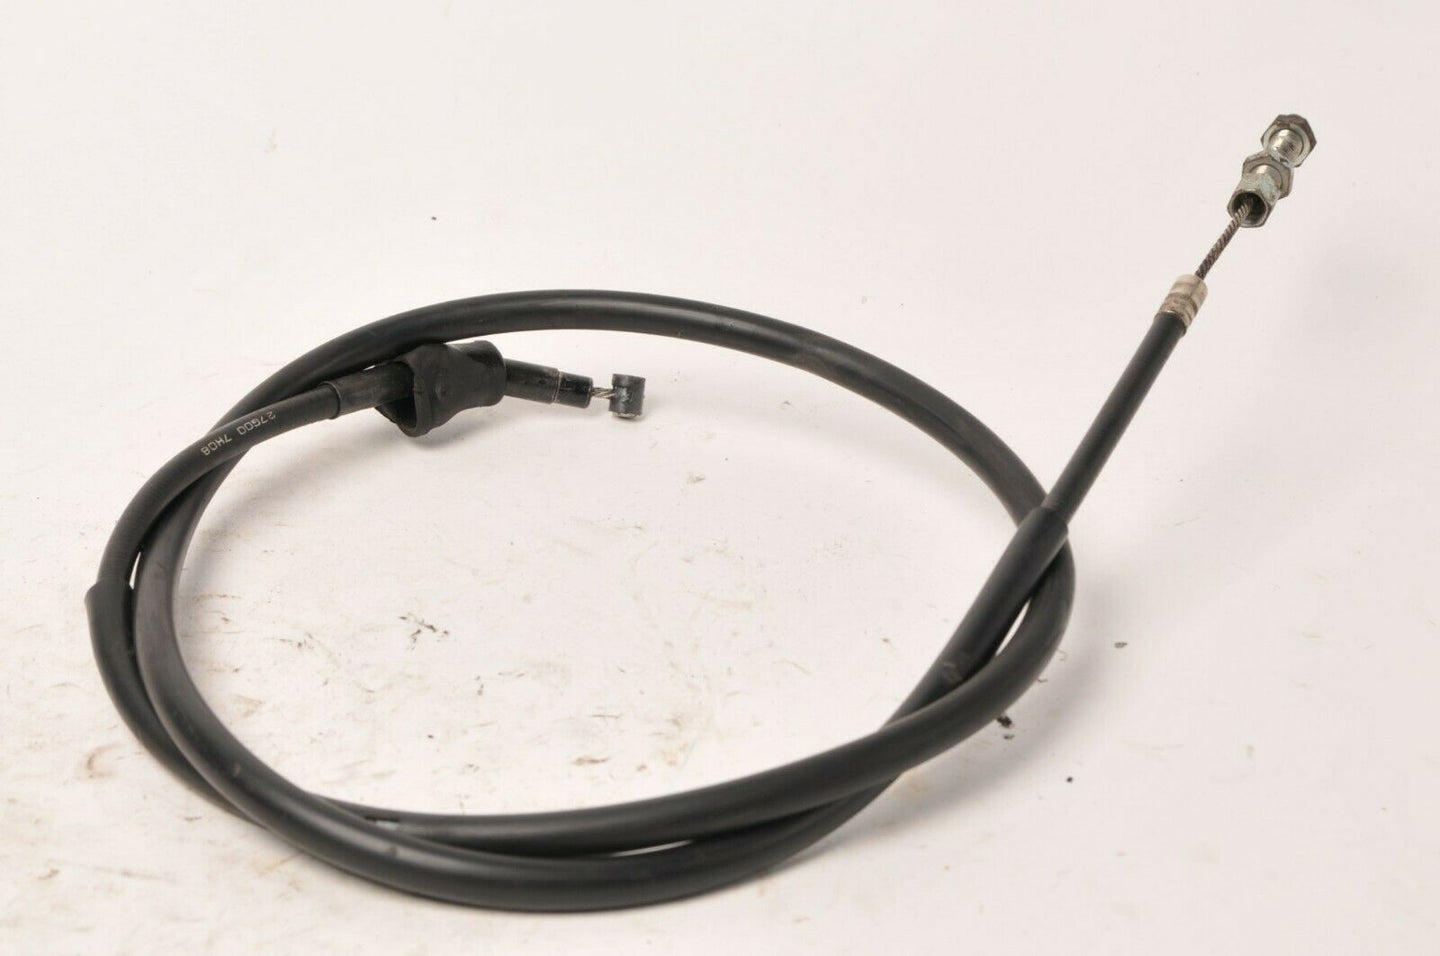 Genuine Suzuki 58200-27G00 7H08 Cable, Clutch assembly - Vstrom DL650 2004-2011